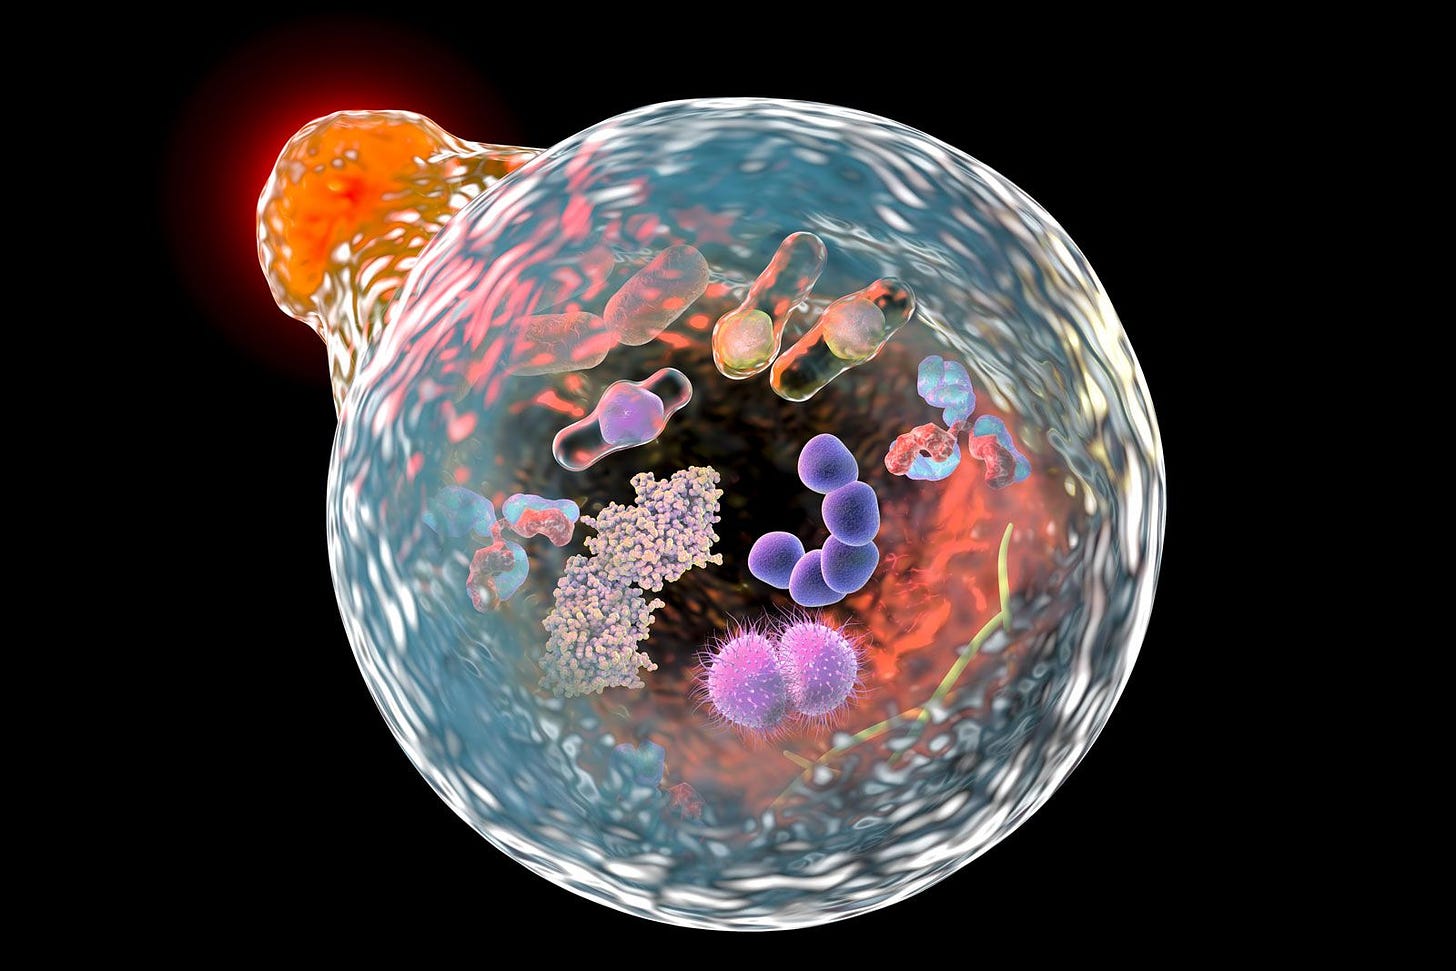 Autophagy | Cellular Process, Benefits & Role in Disease | Britannica